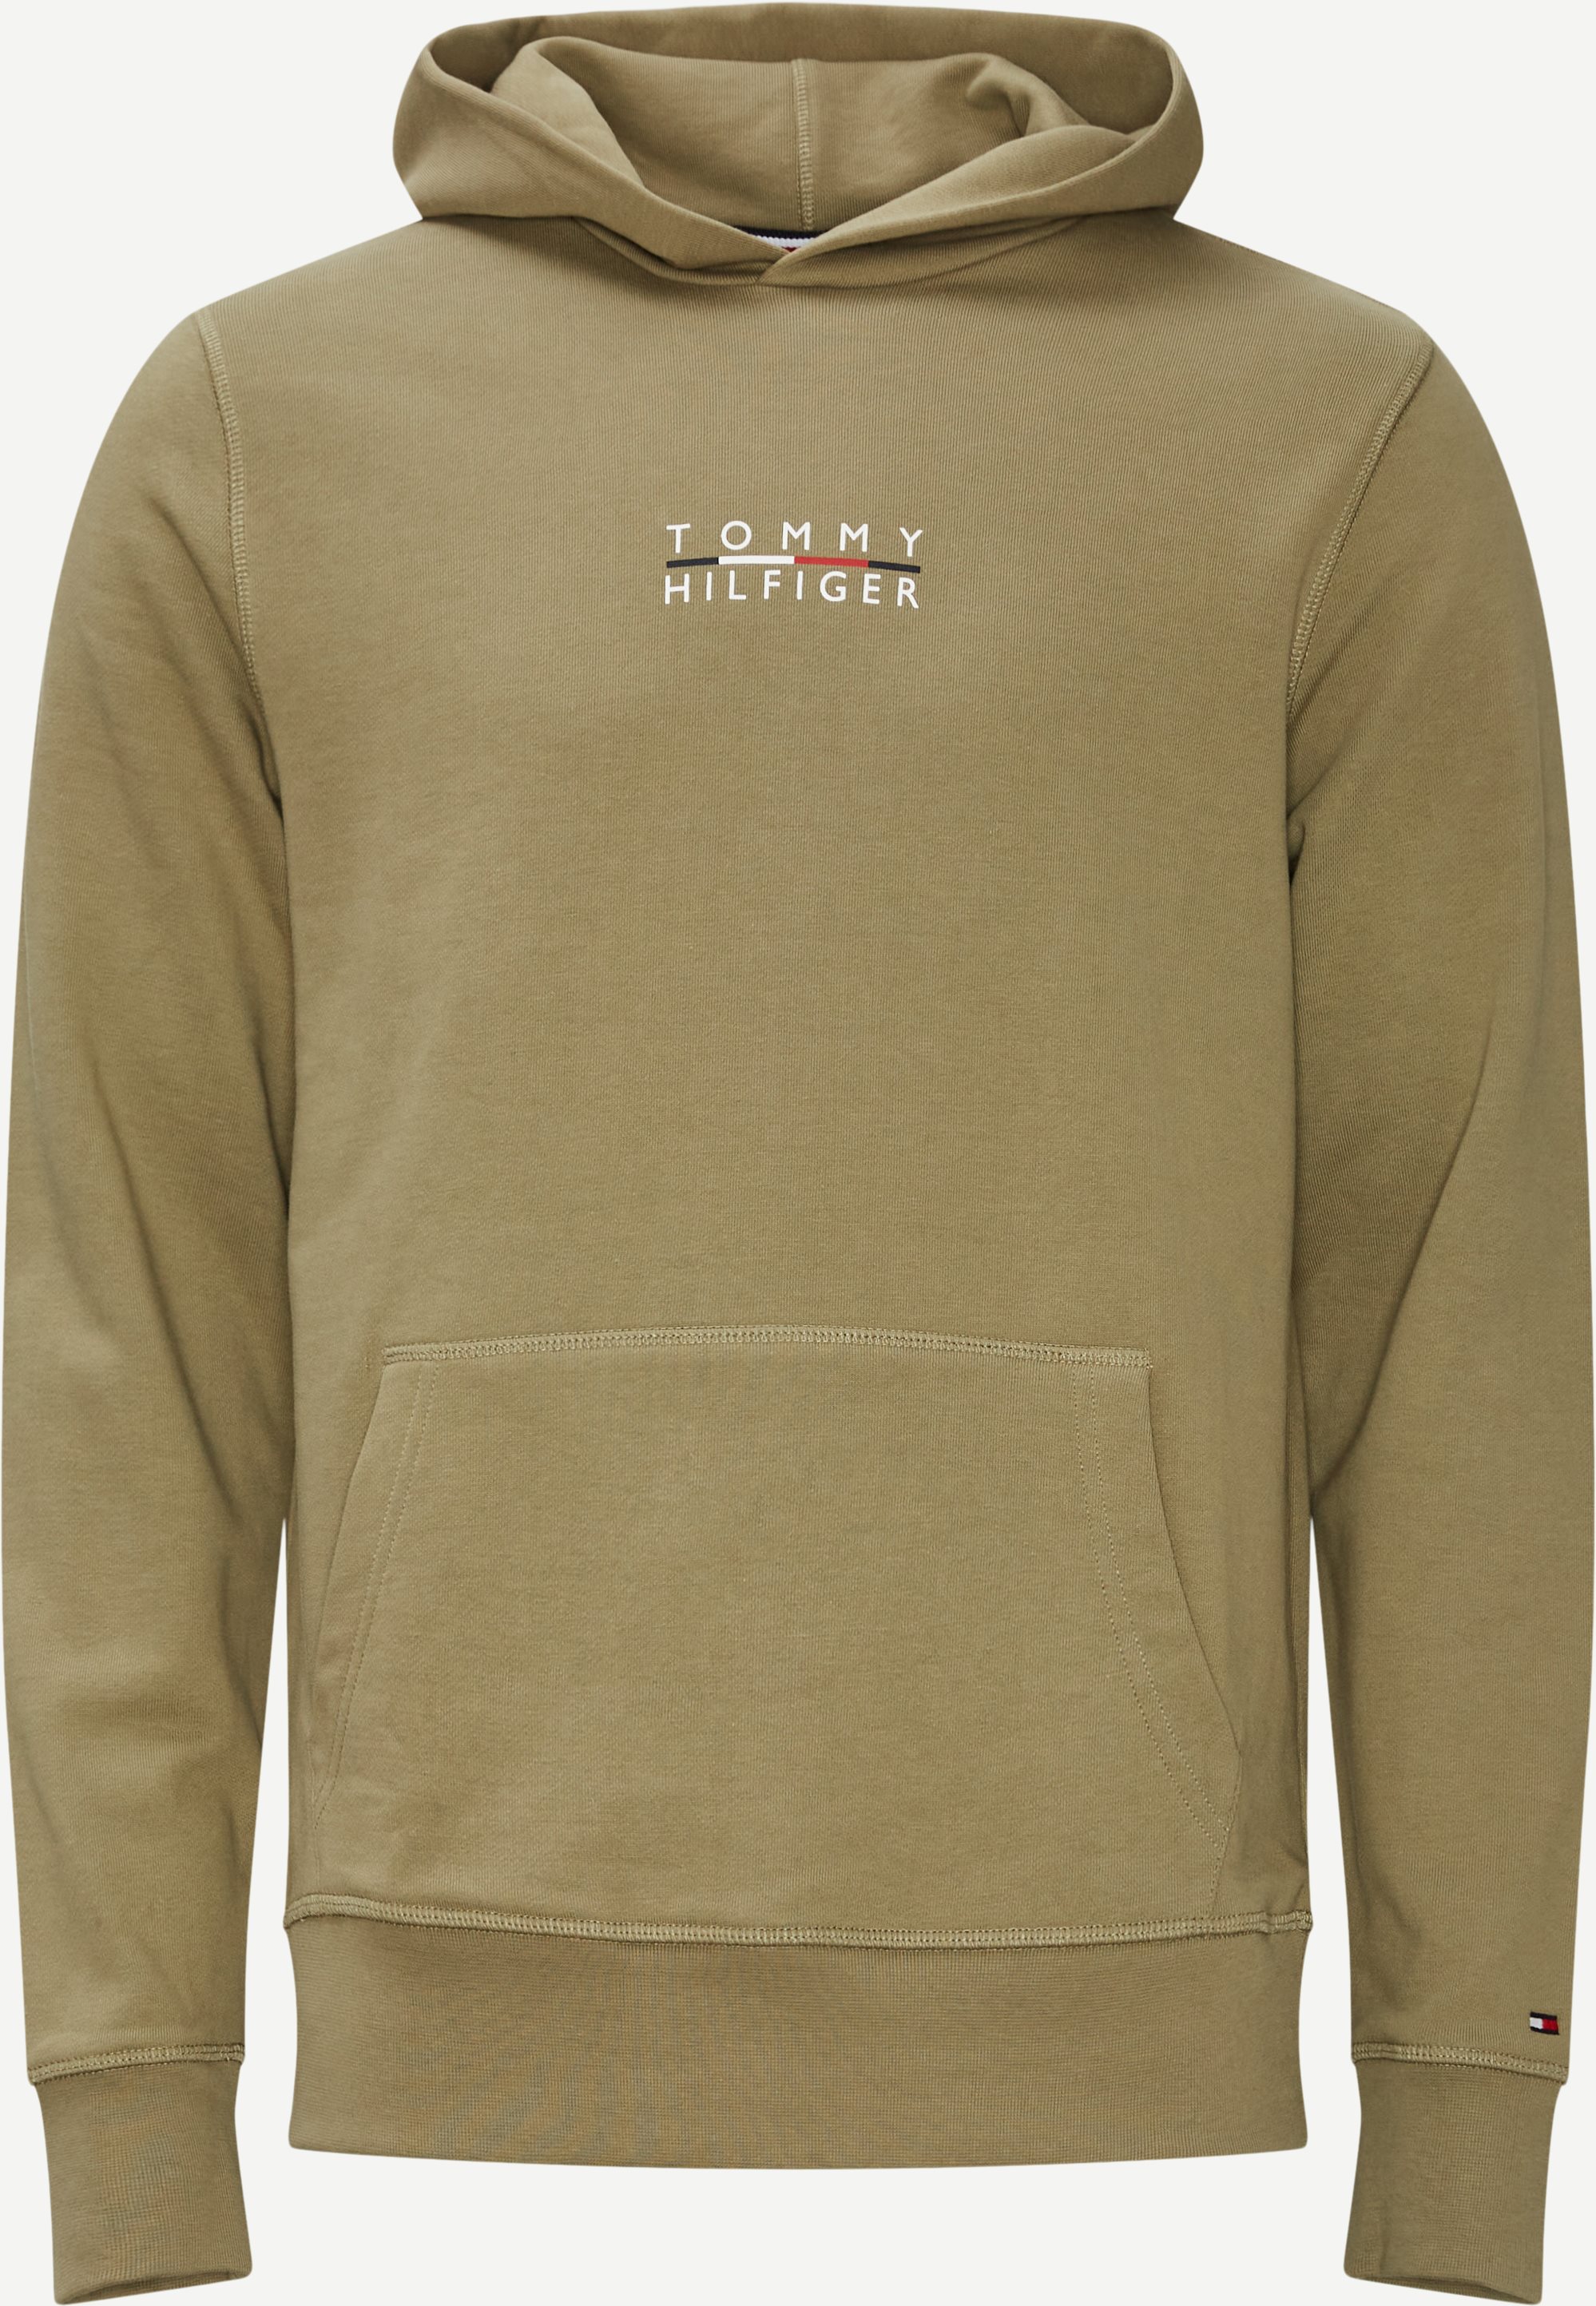 Tommy Hilfiger Sweatshirts 24150 SQUARE LOGO HOODY Army